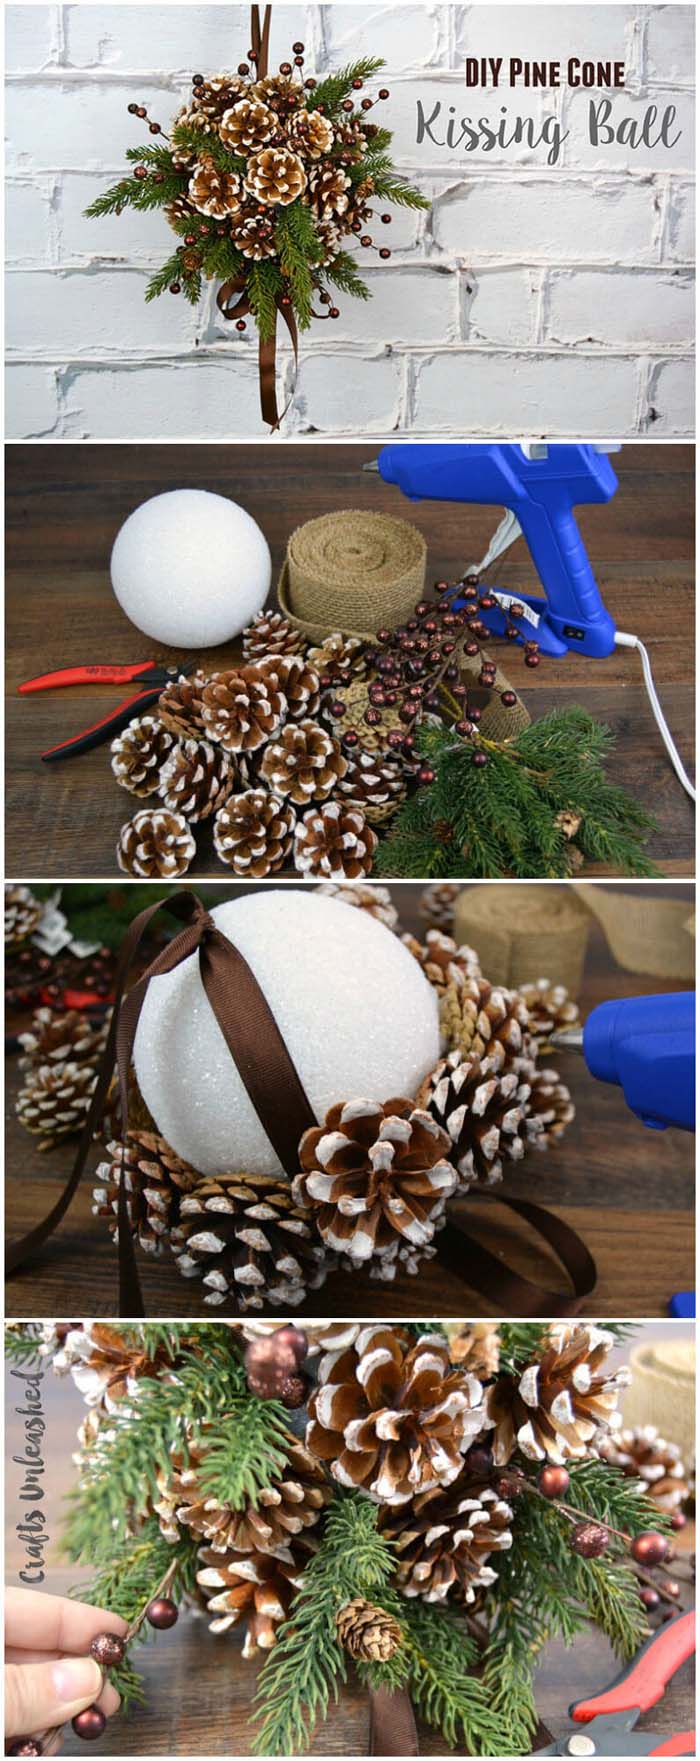 Pine Cone DIY Kissing Ball #Christmas #crafts #decorations #decorhomeideas